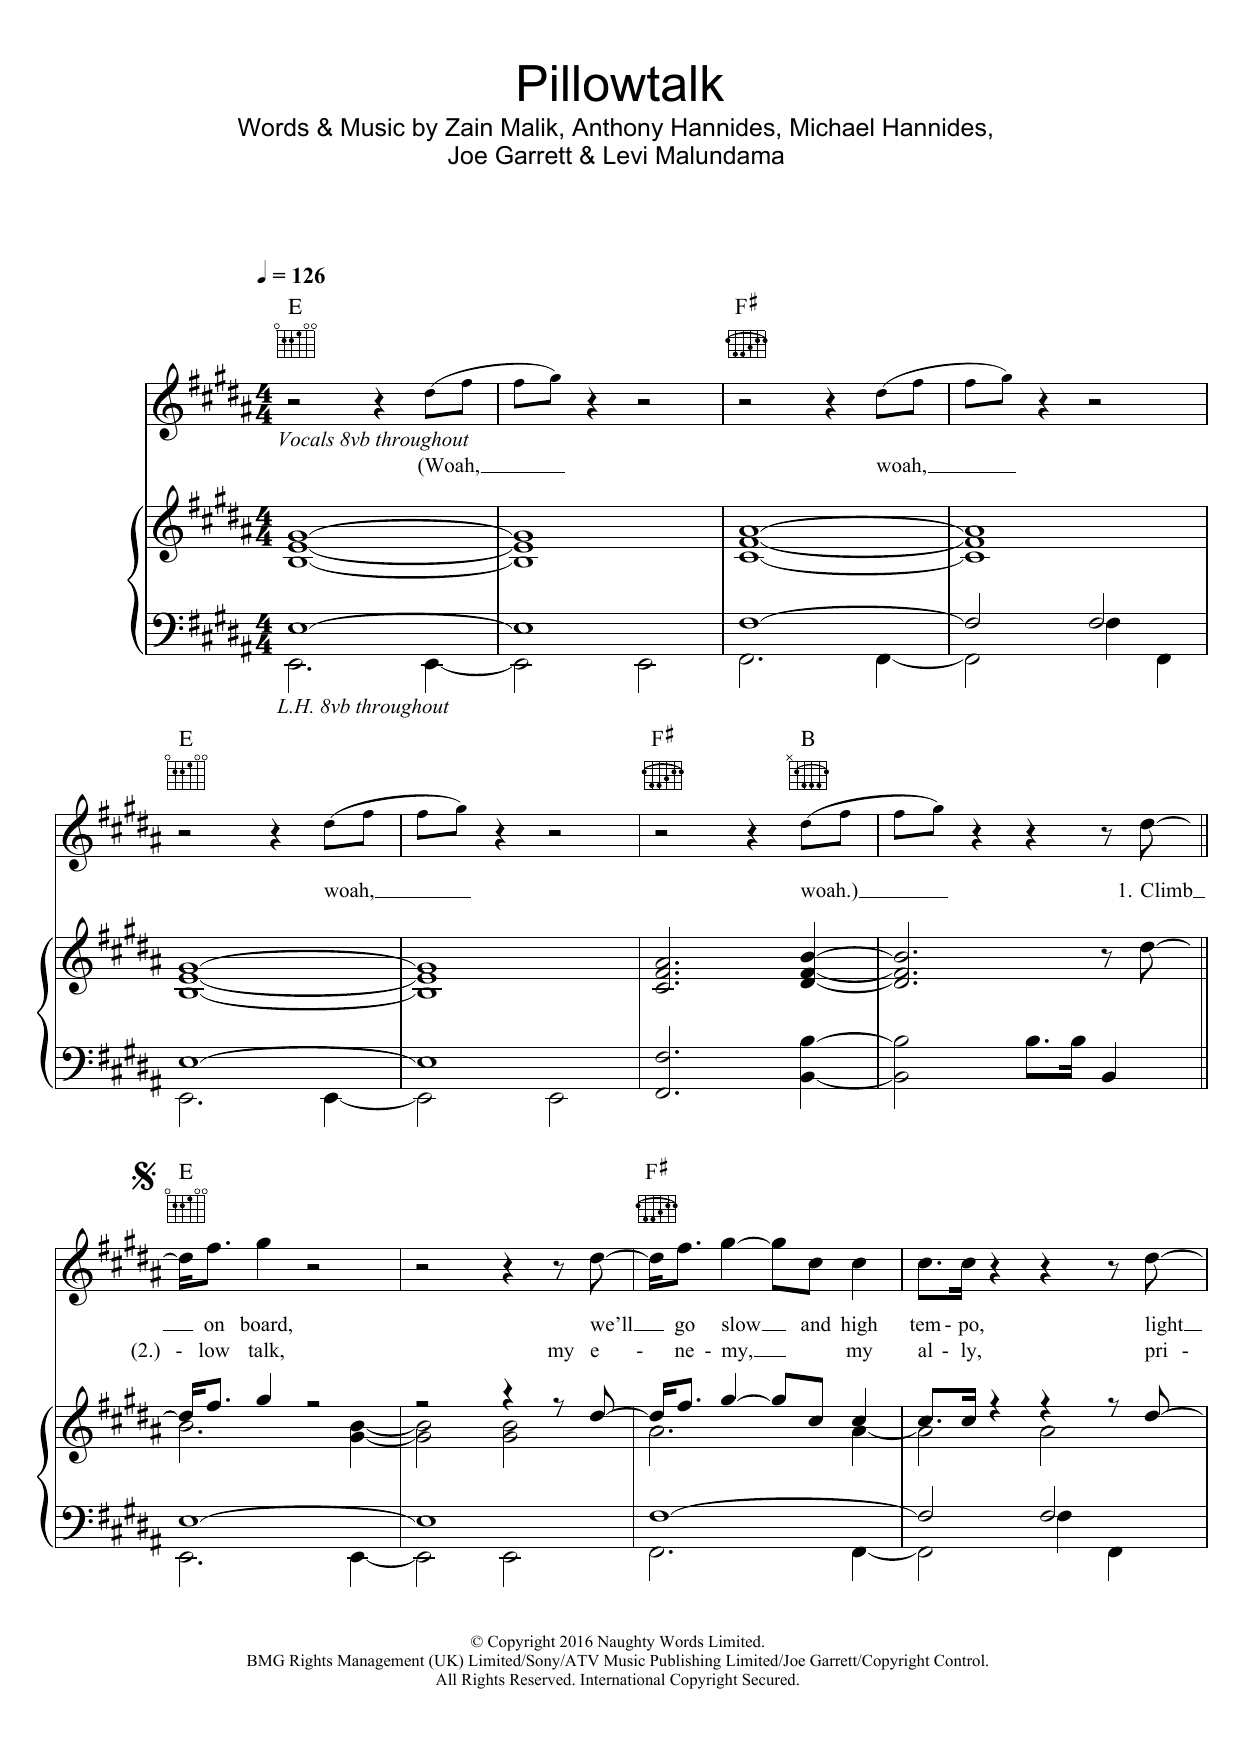 ZAYN Pillowtalk Sheet Music Notes & Chords for Ukulele - Download or Print PDF